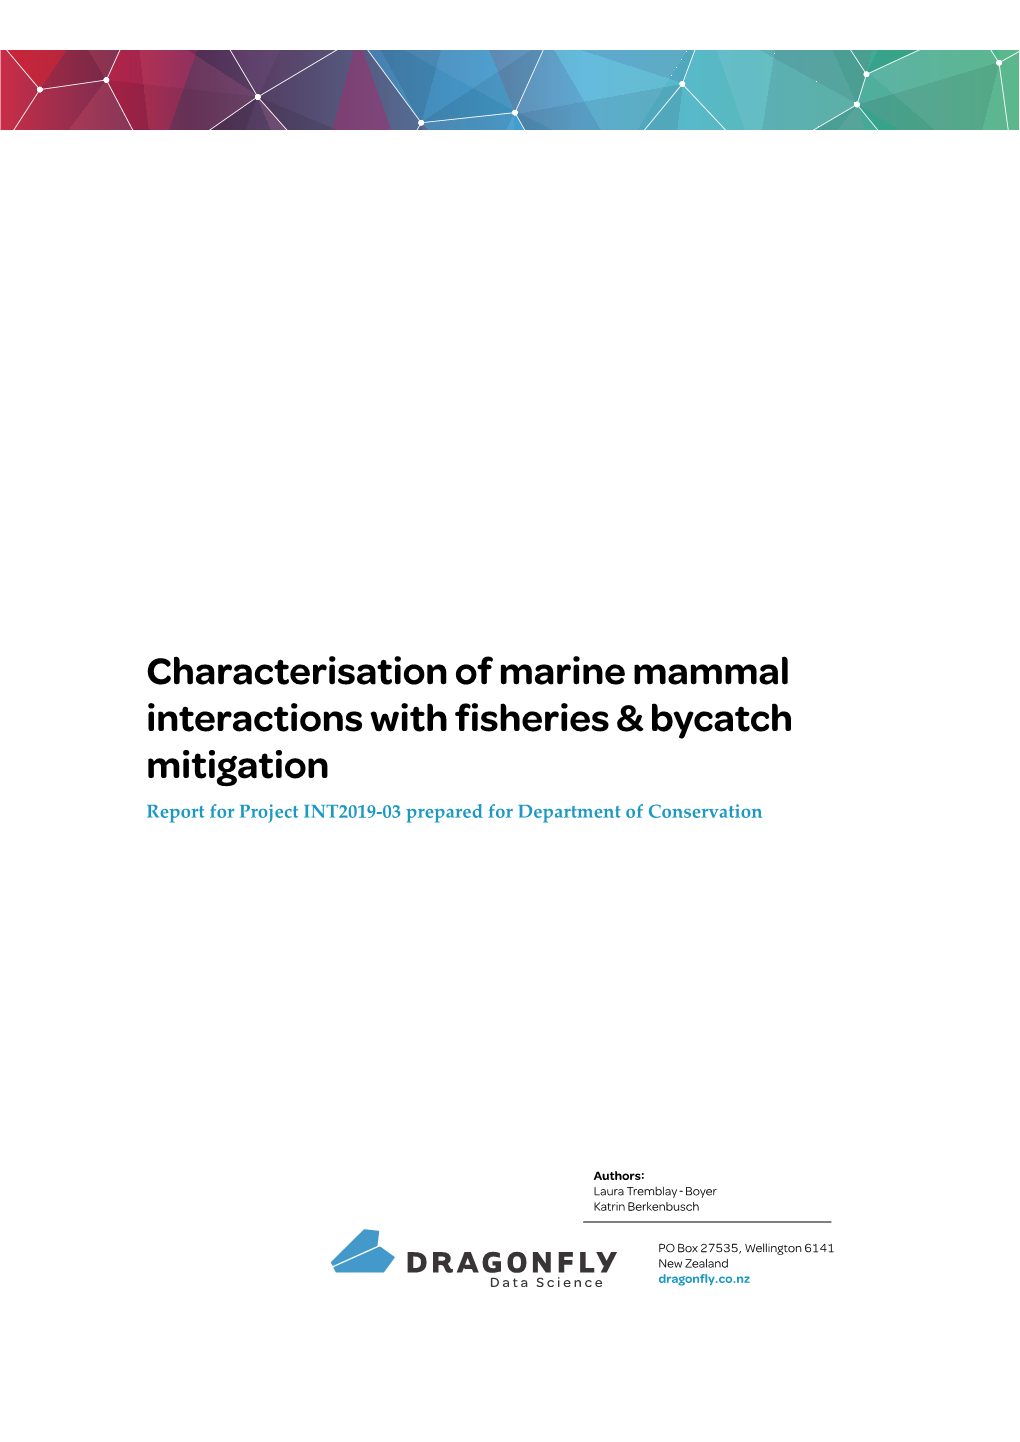 Marine Mammal Interactions & Bycatch Mitigation